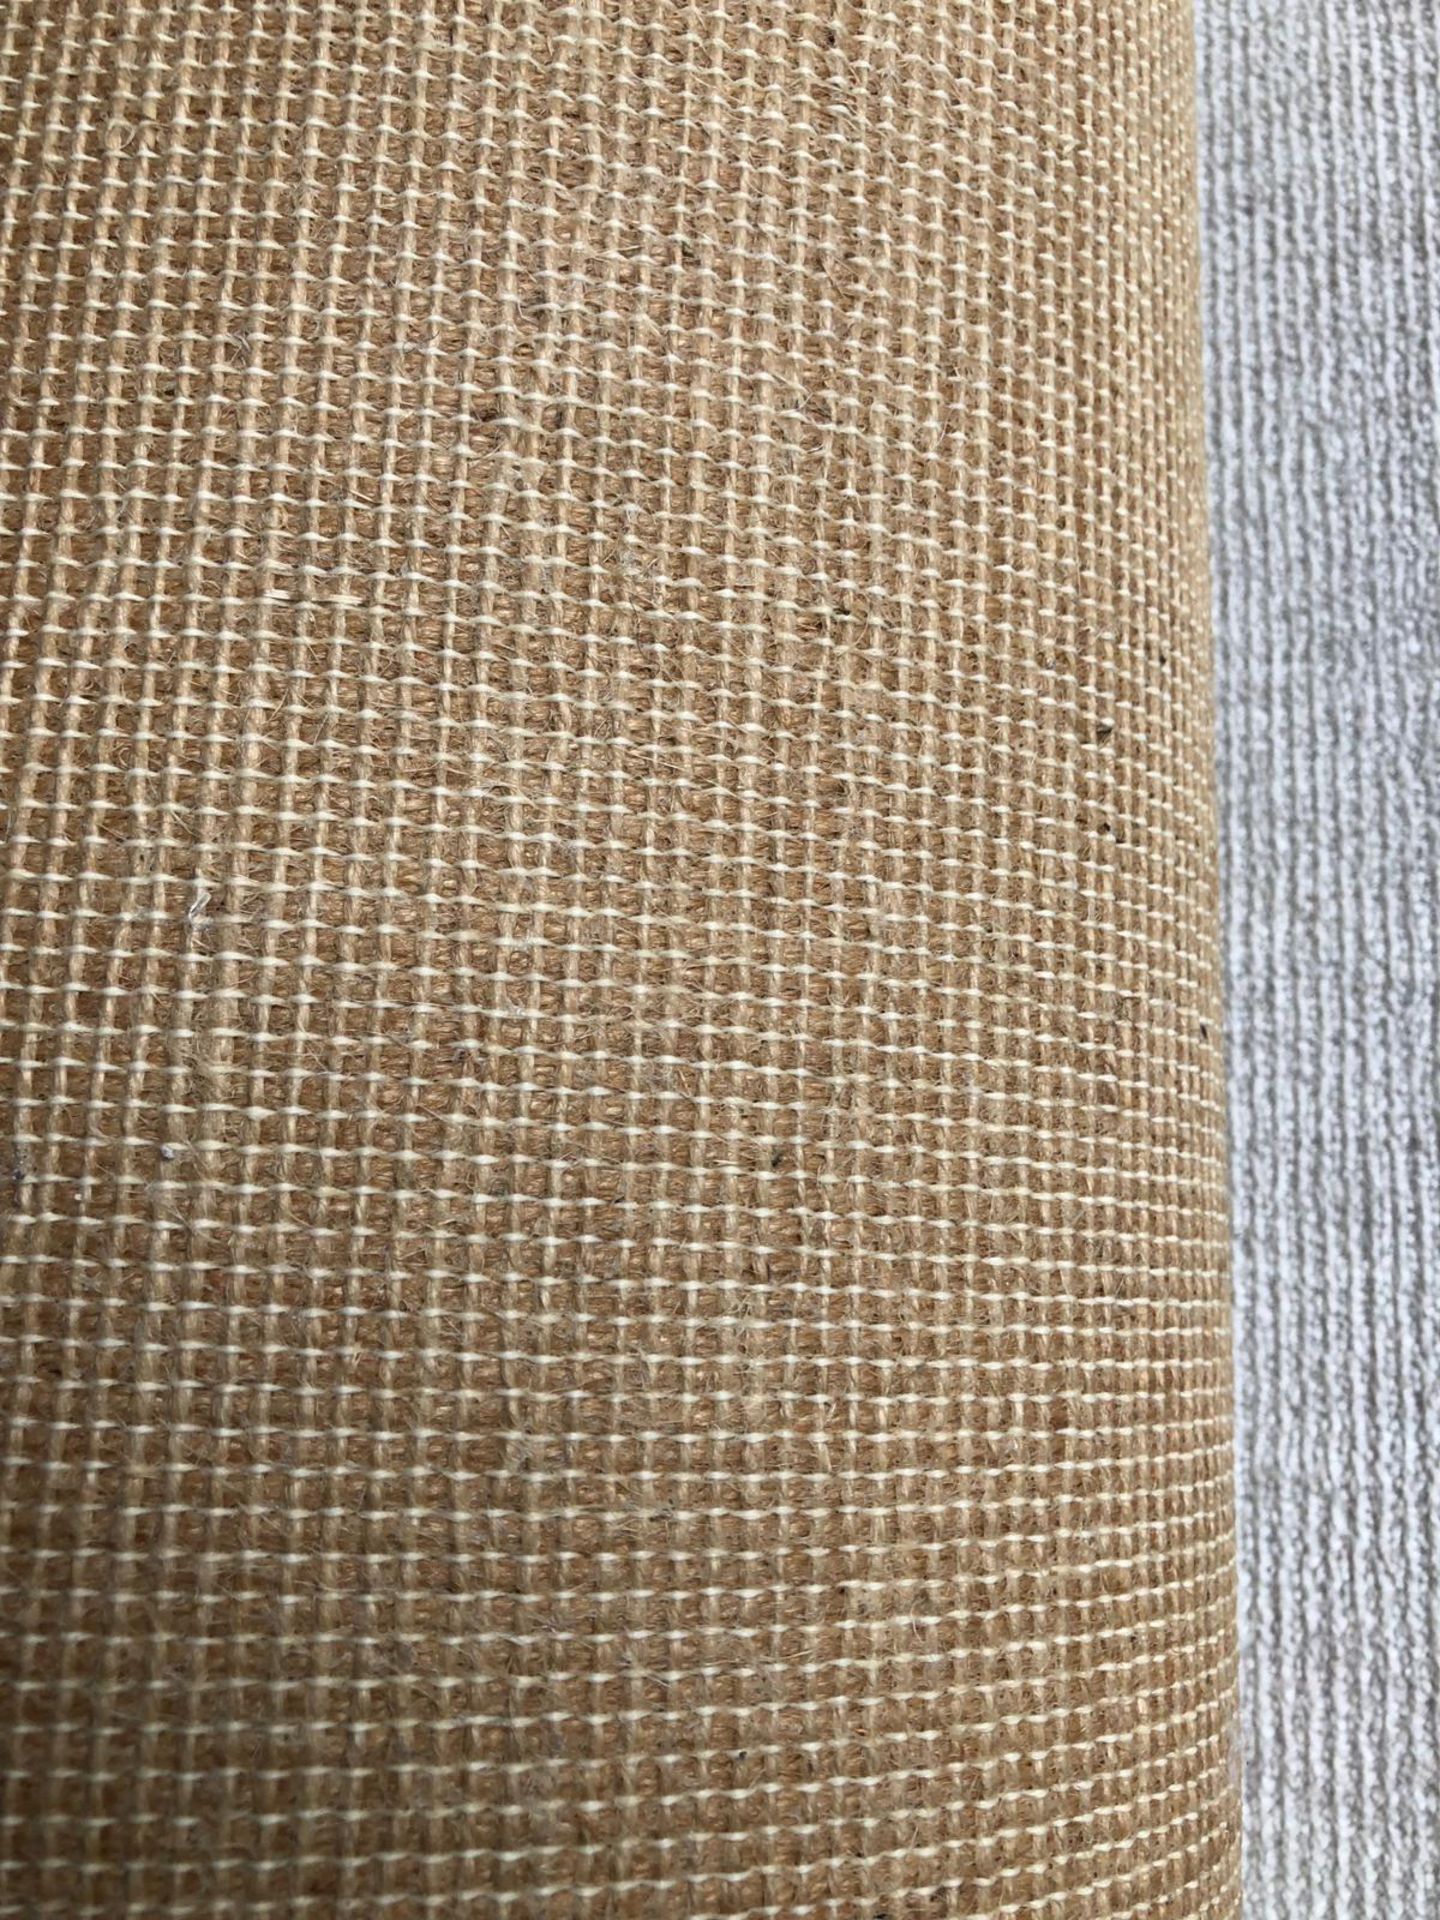 Light Grey Wool Mix 5.70M x 2.85M - Image 2 of 2